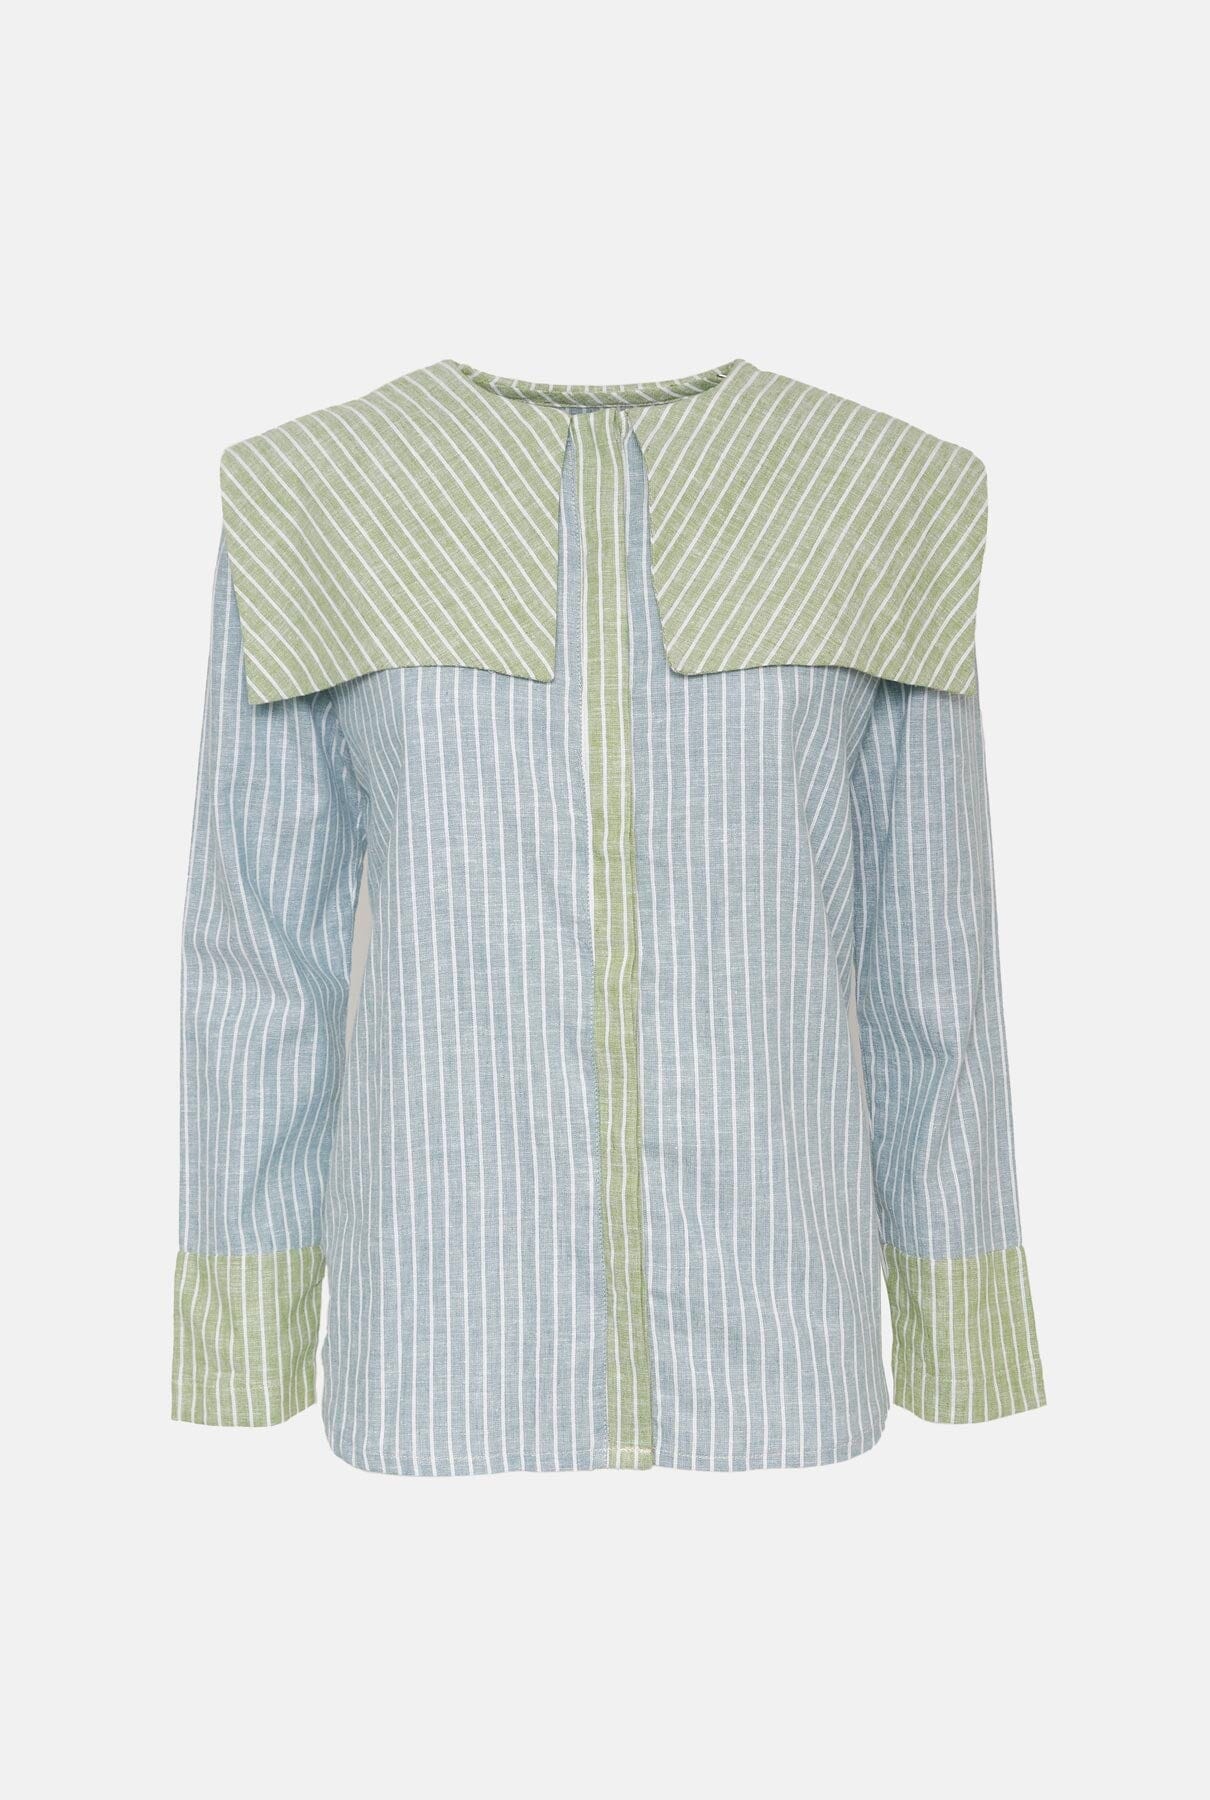 Camisa Loulou azul/verde Shirts & blouses Vano Studio 